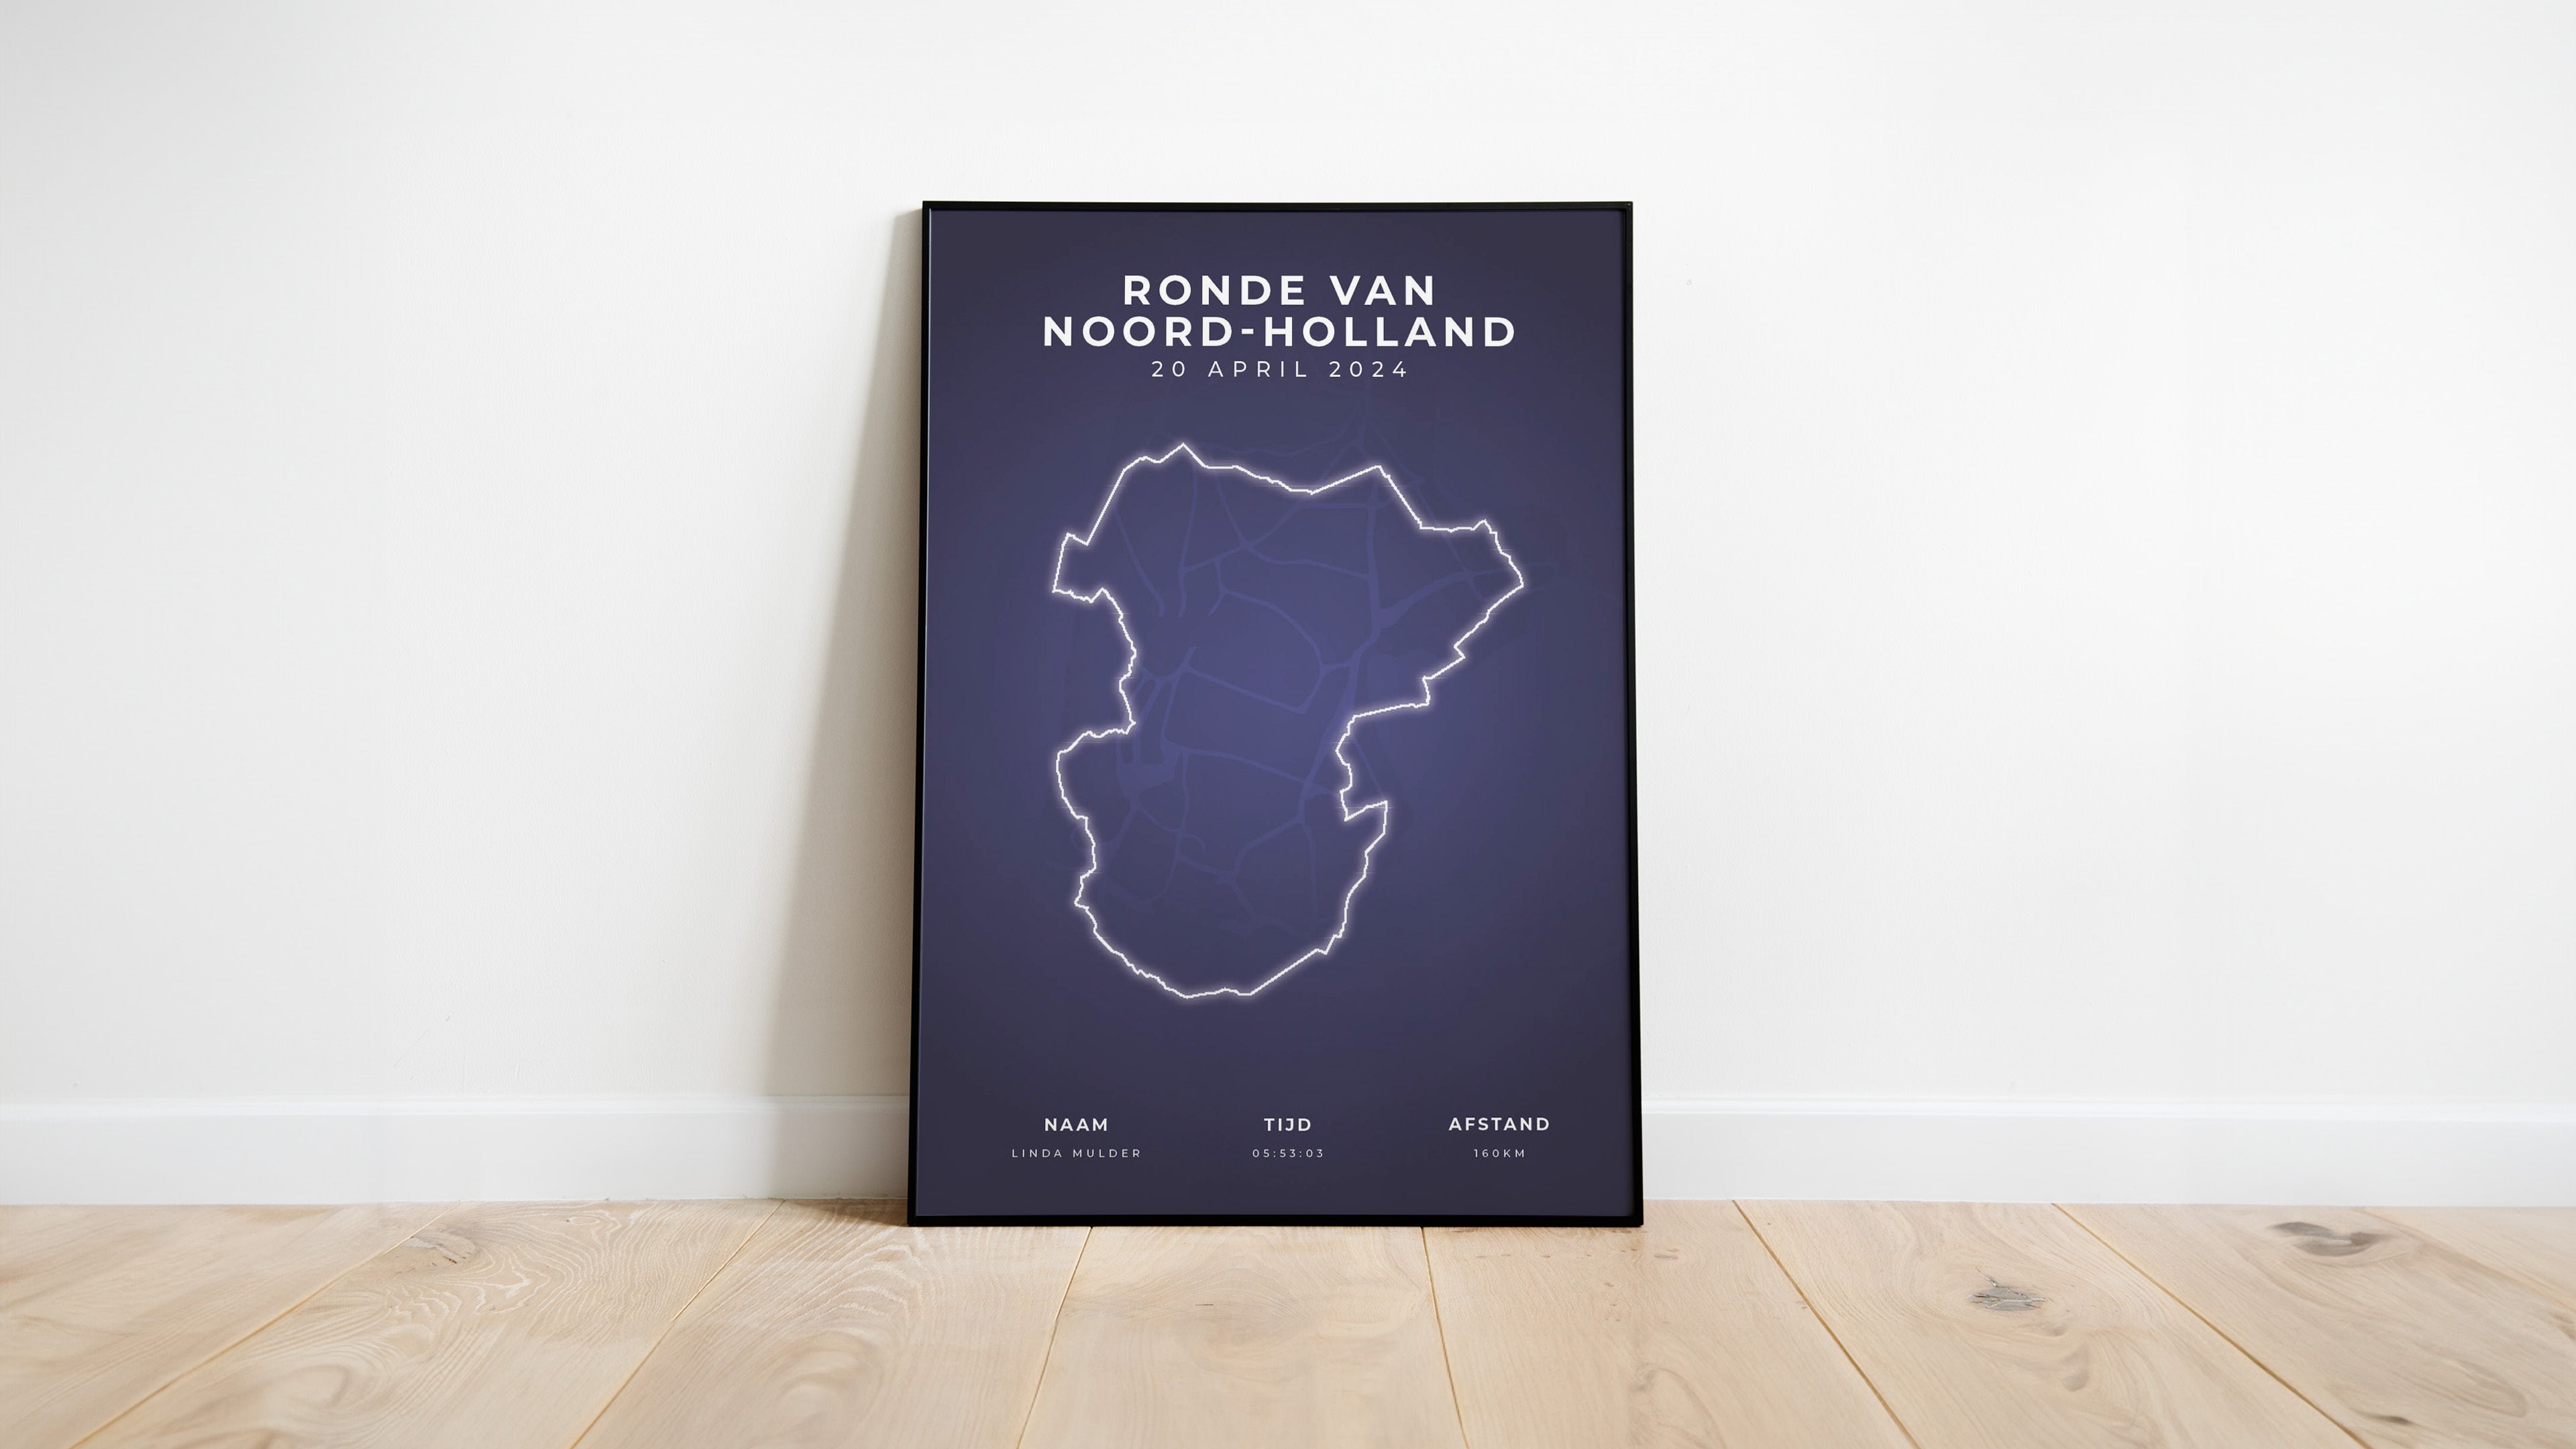 Ronde van Noord-Holland 2024